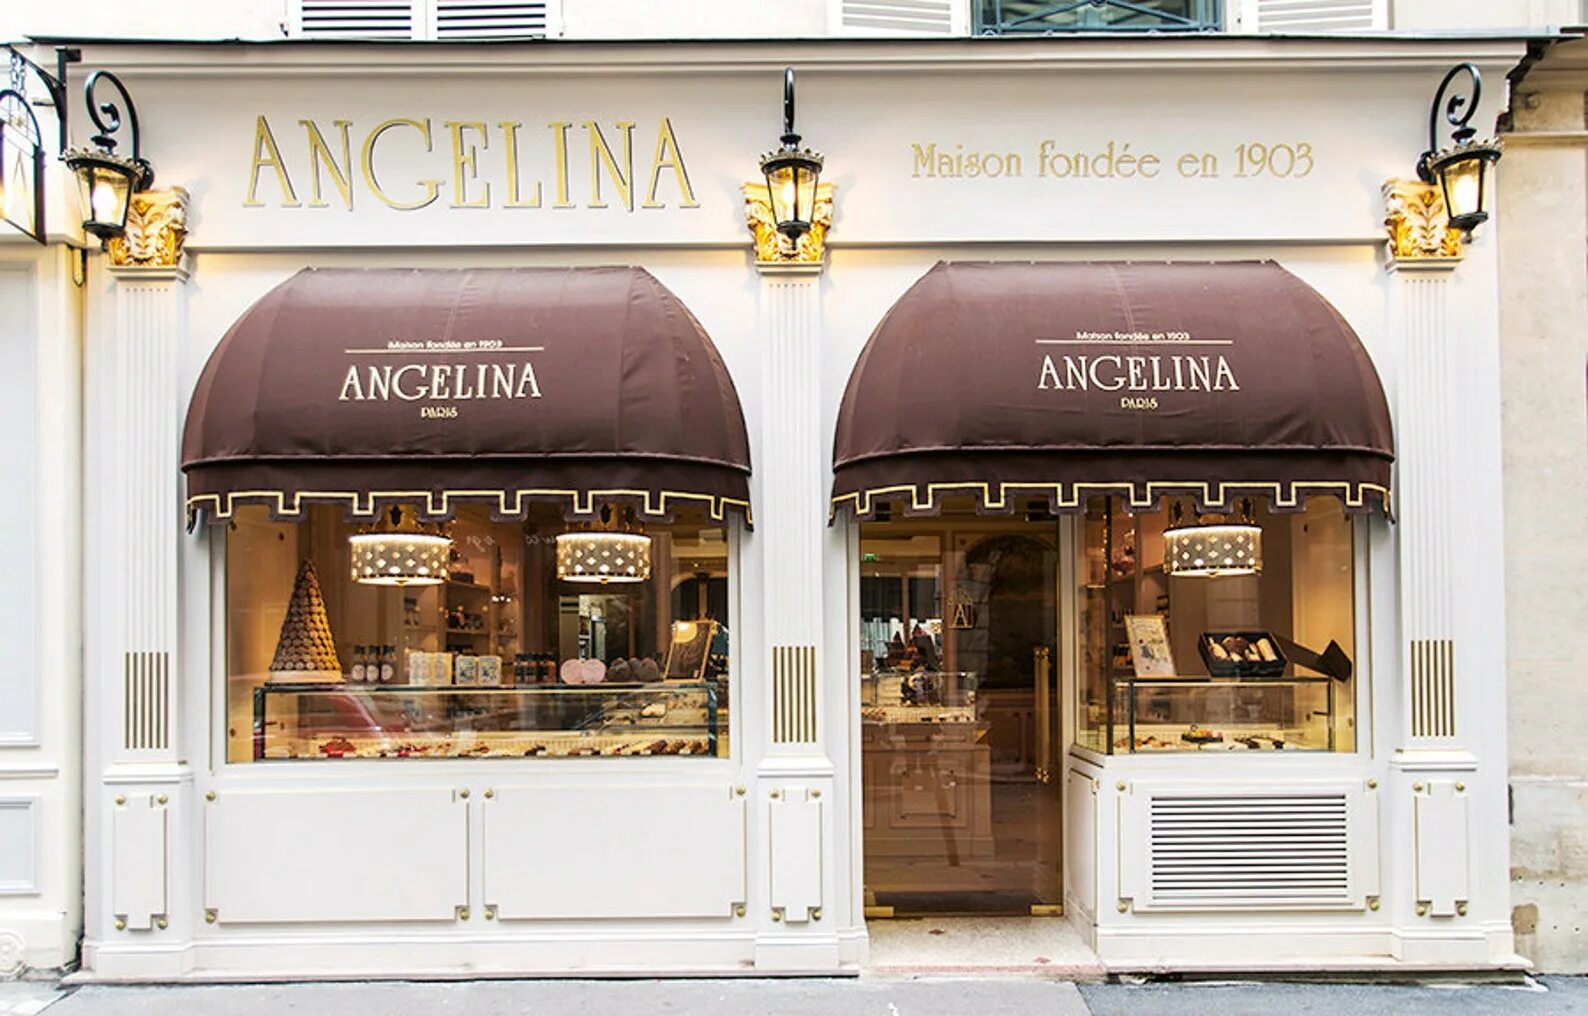 Boulangerie кафе в Париже. Angelina кафе в Париже. Французские пекарни во Франции.